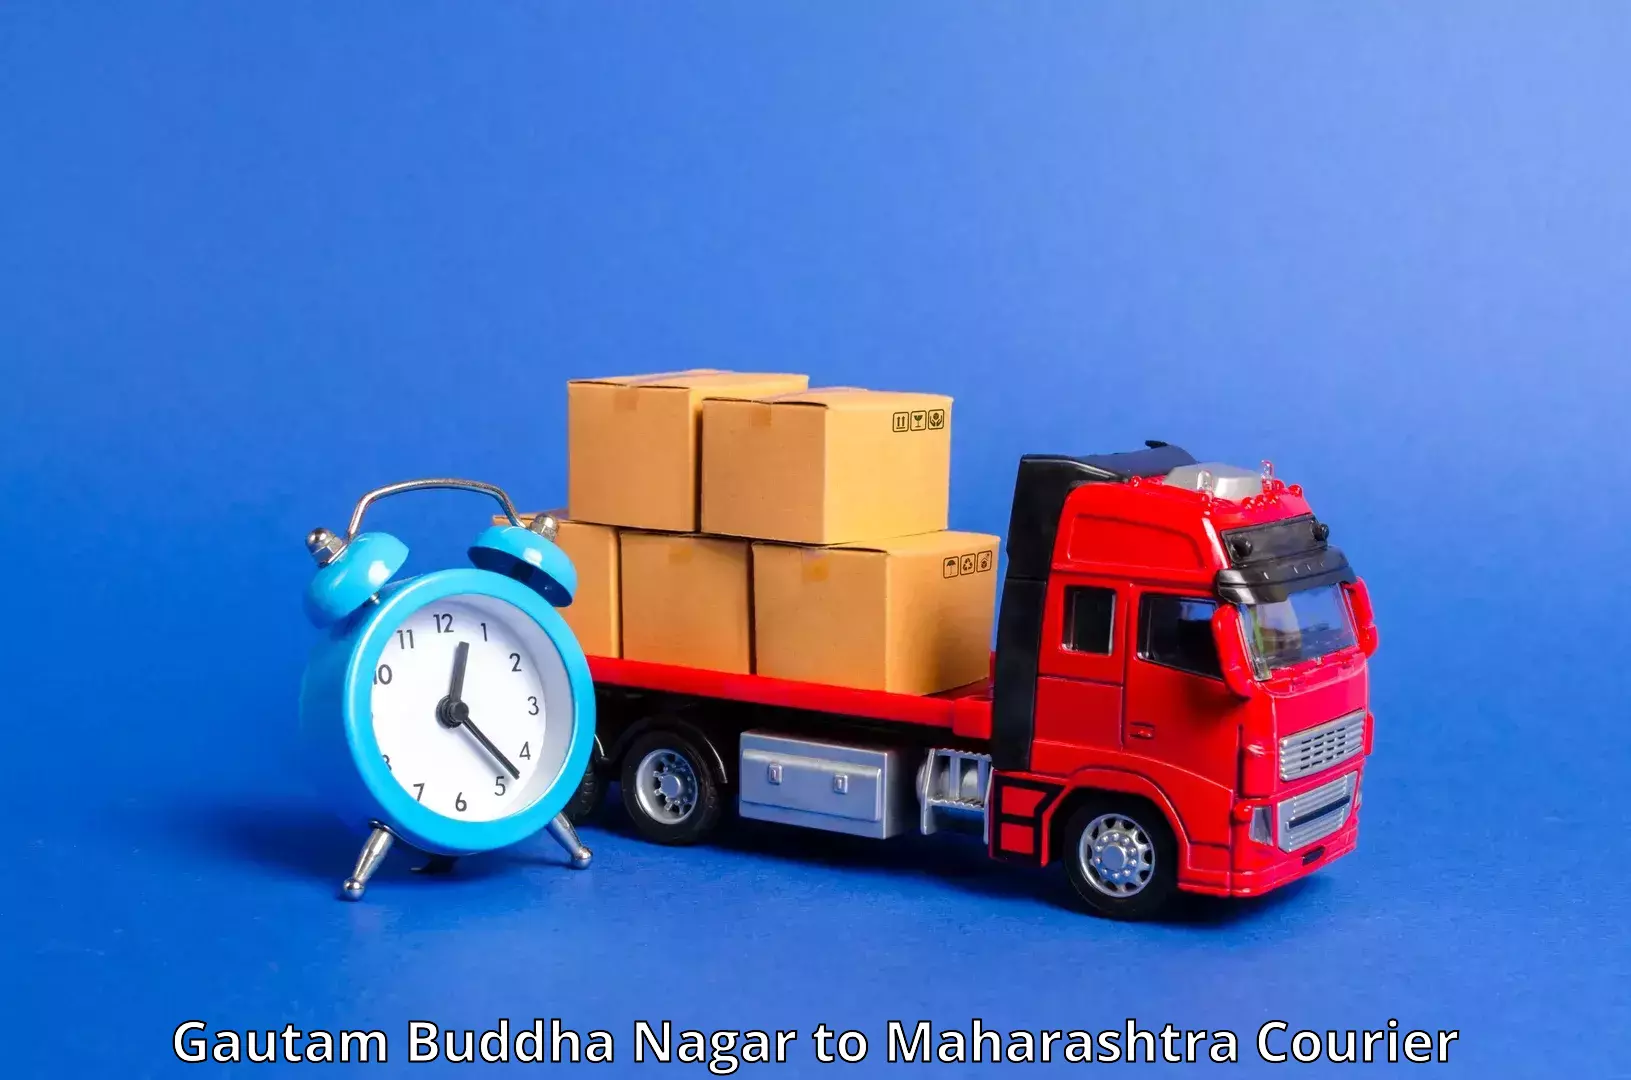 Global logistics network Gautam Buddha Nagar to Maharashtra